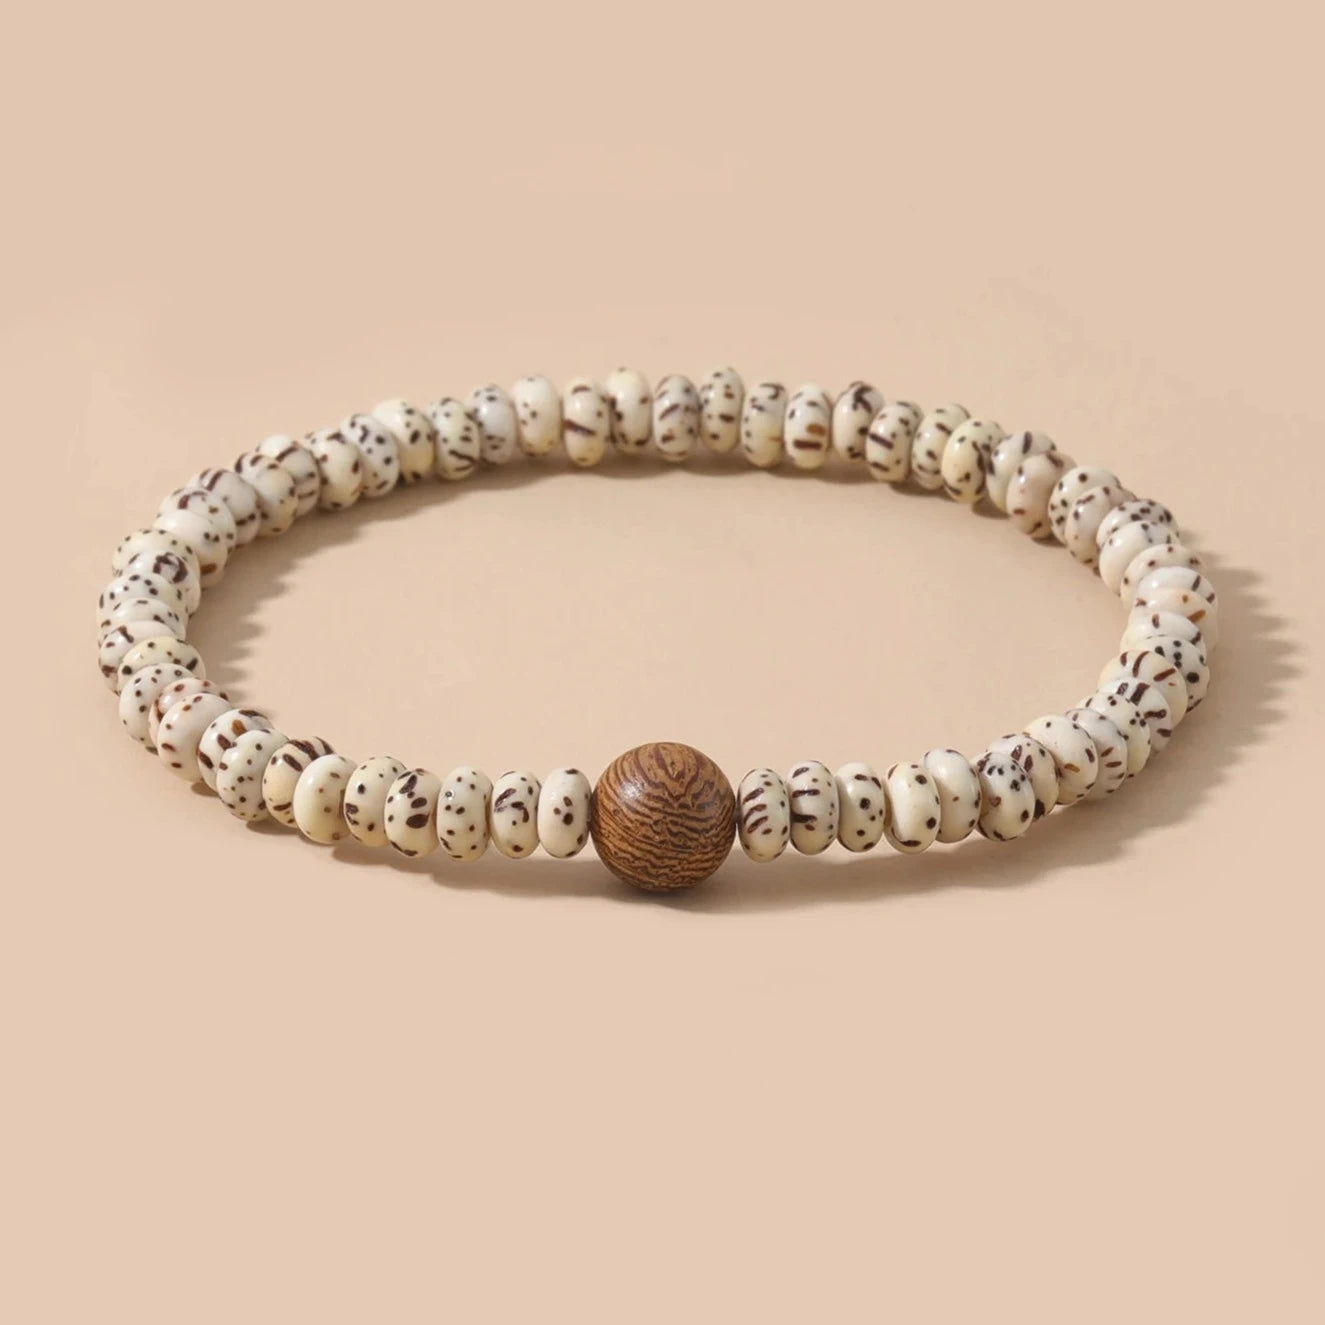 Tibetan Bodhi Seed Bracelet